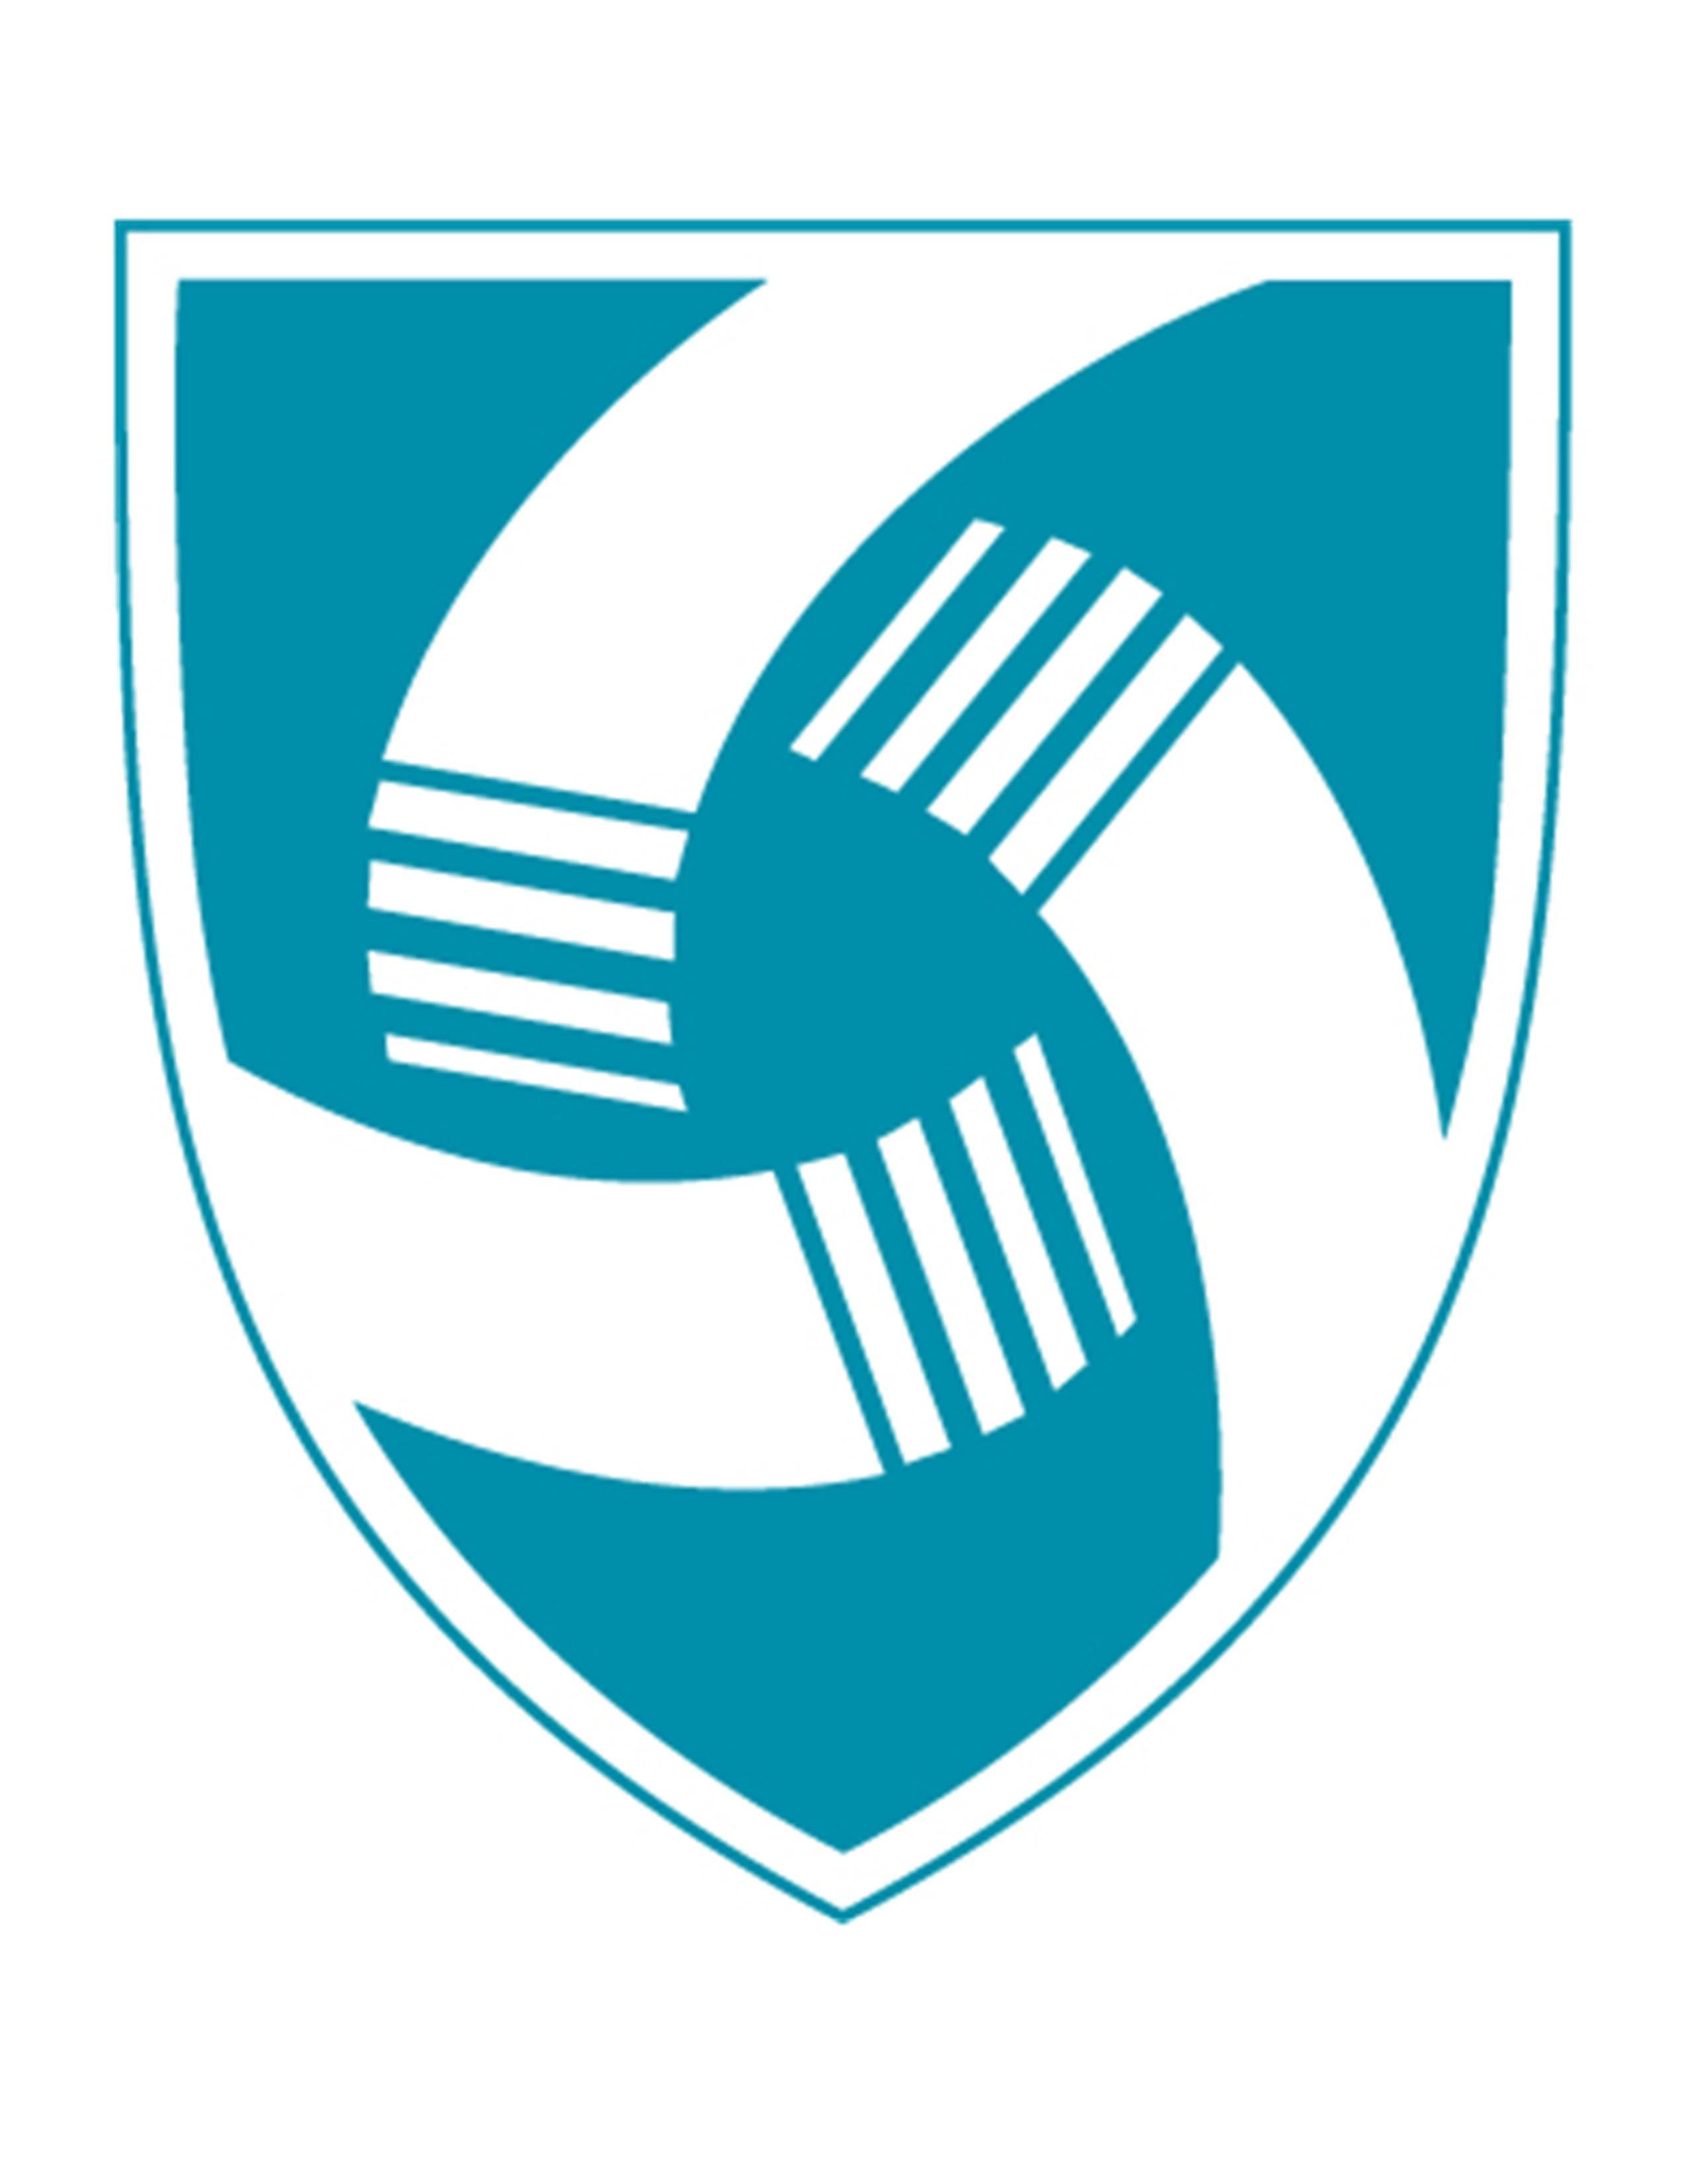 Jpeg Logo - Affiliation logos - PhD Posters